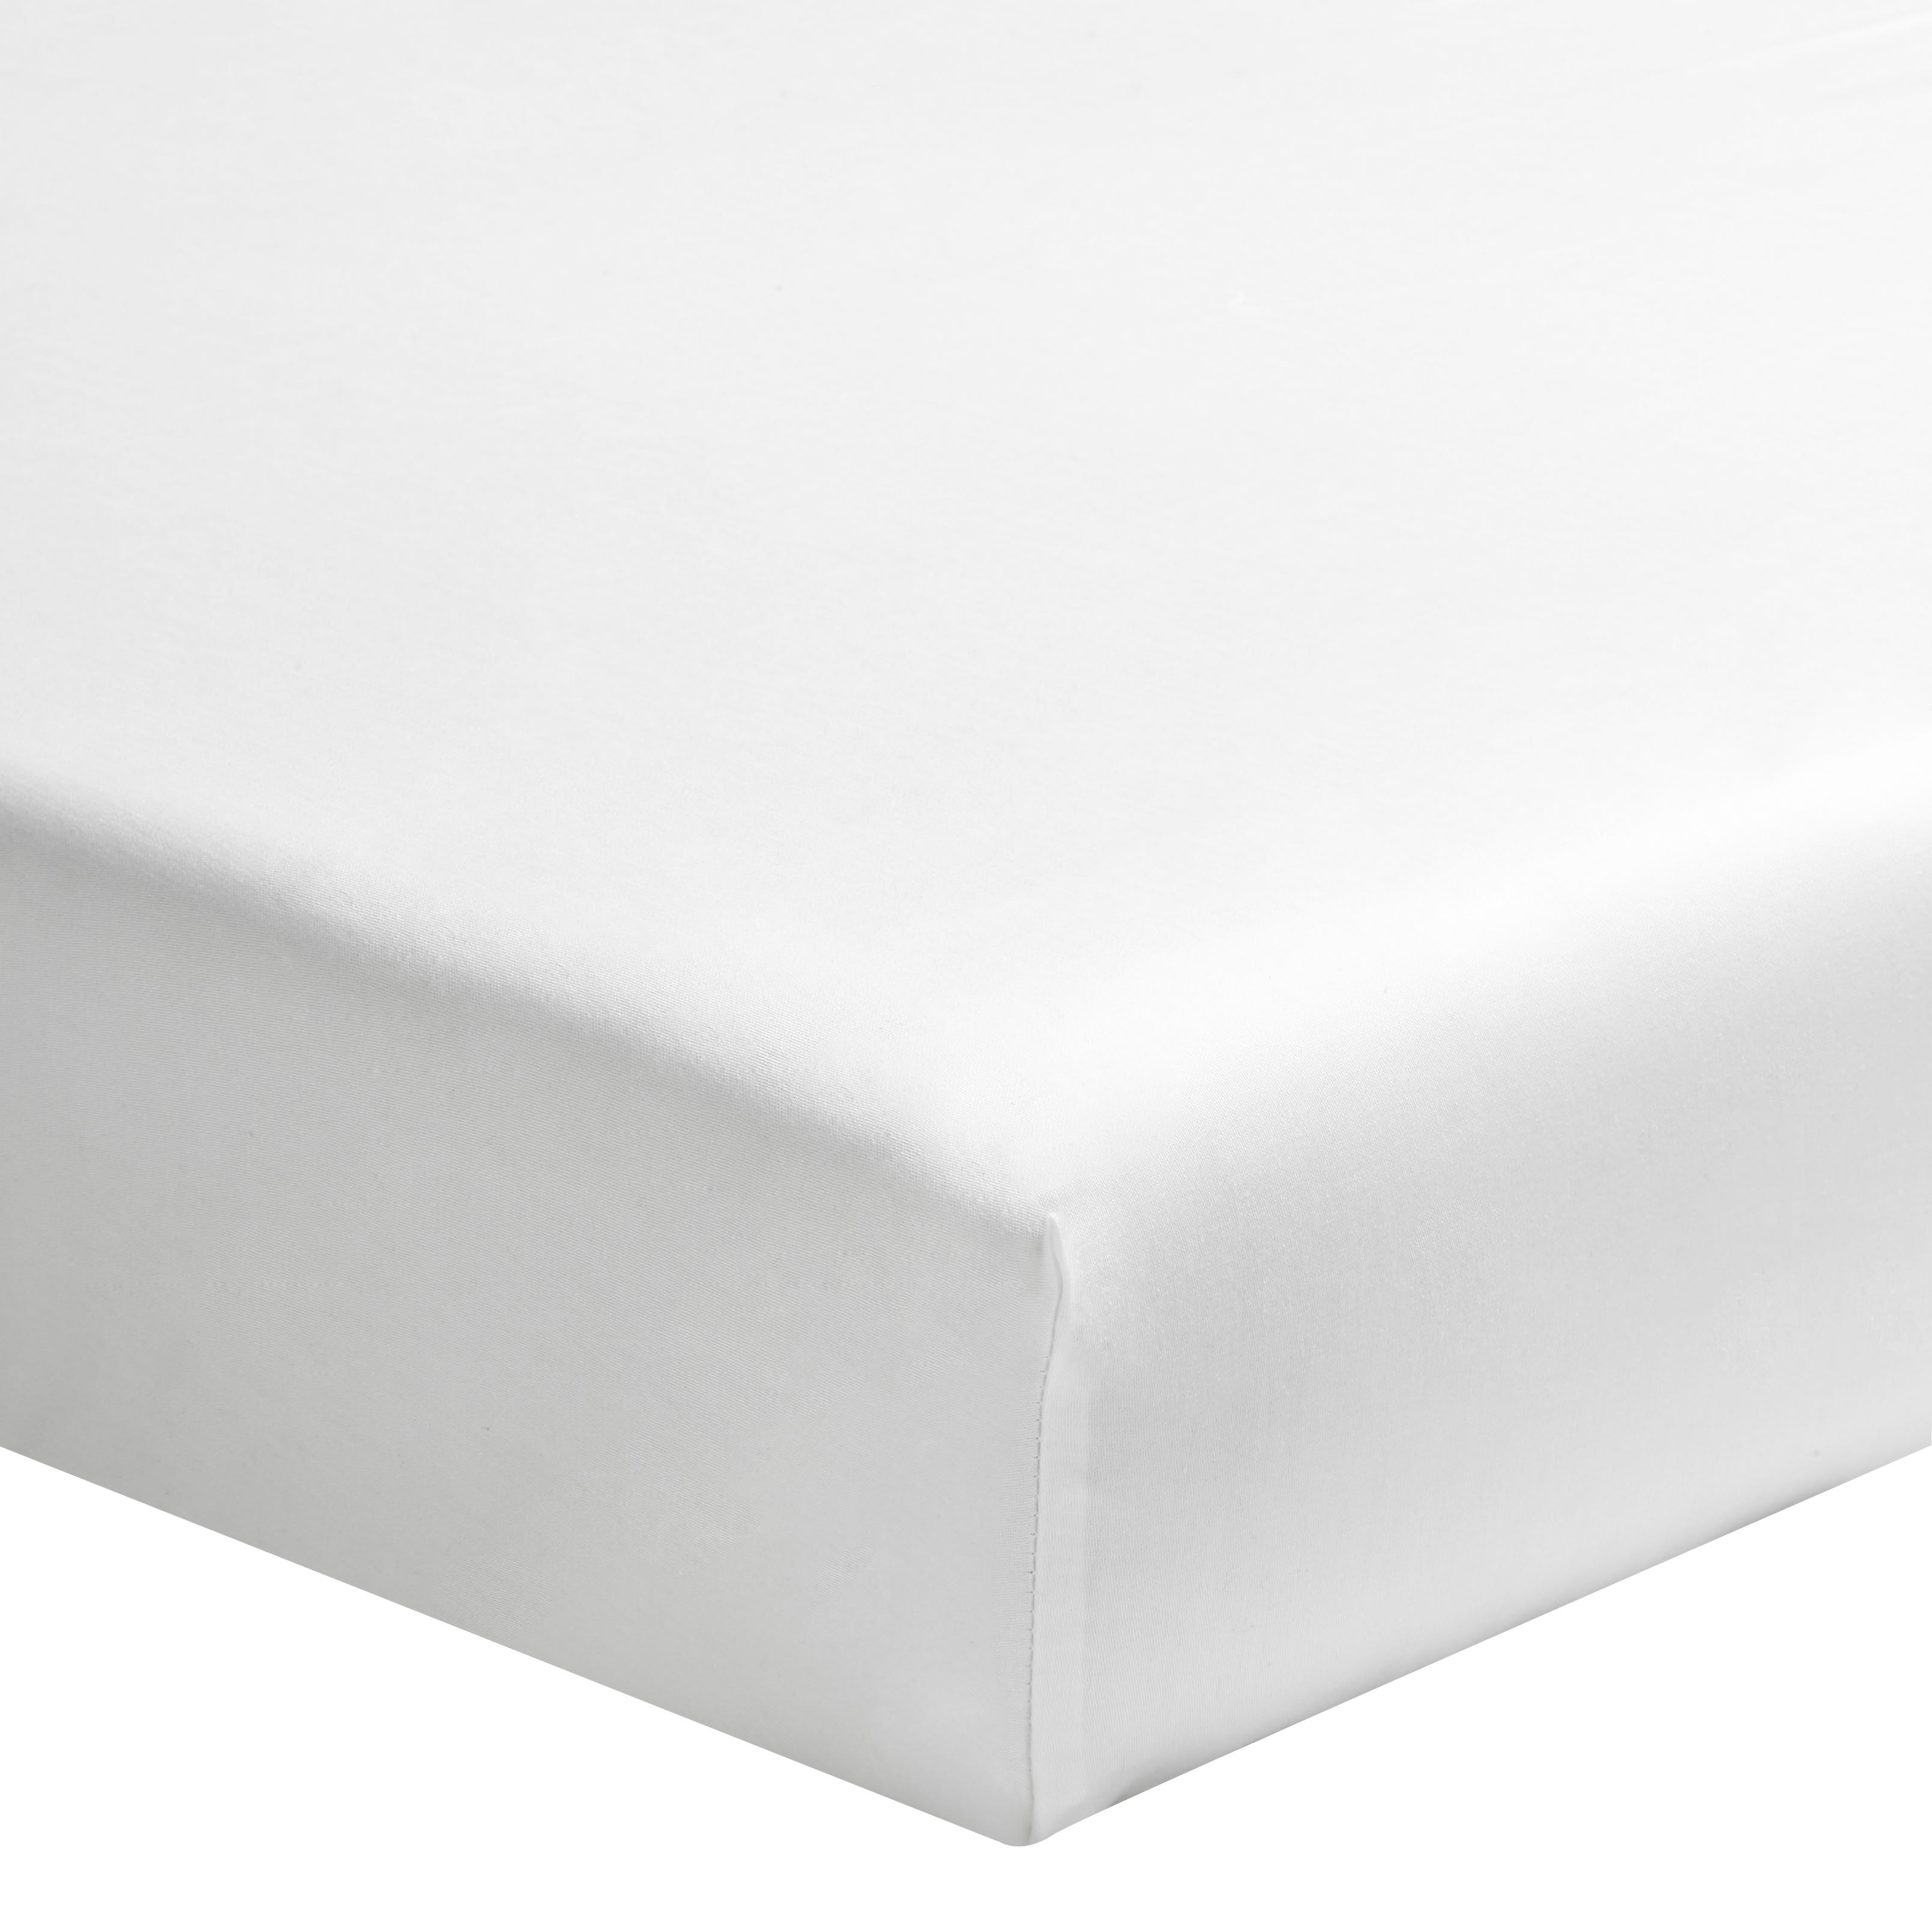 Protège-matelas housse microporeux blanc 160x200 PROTECTION